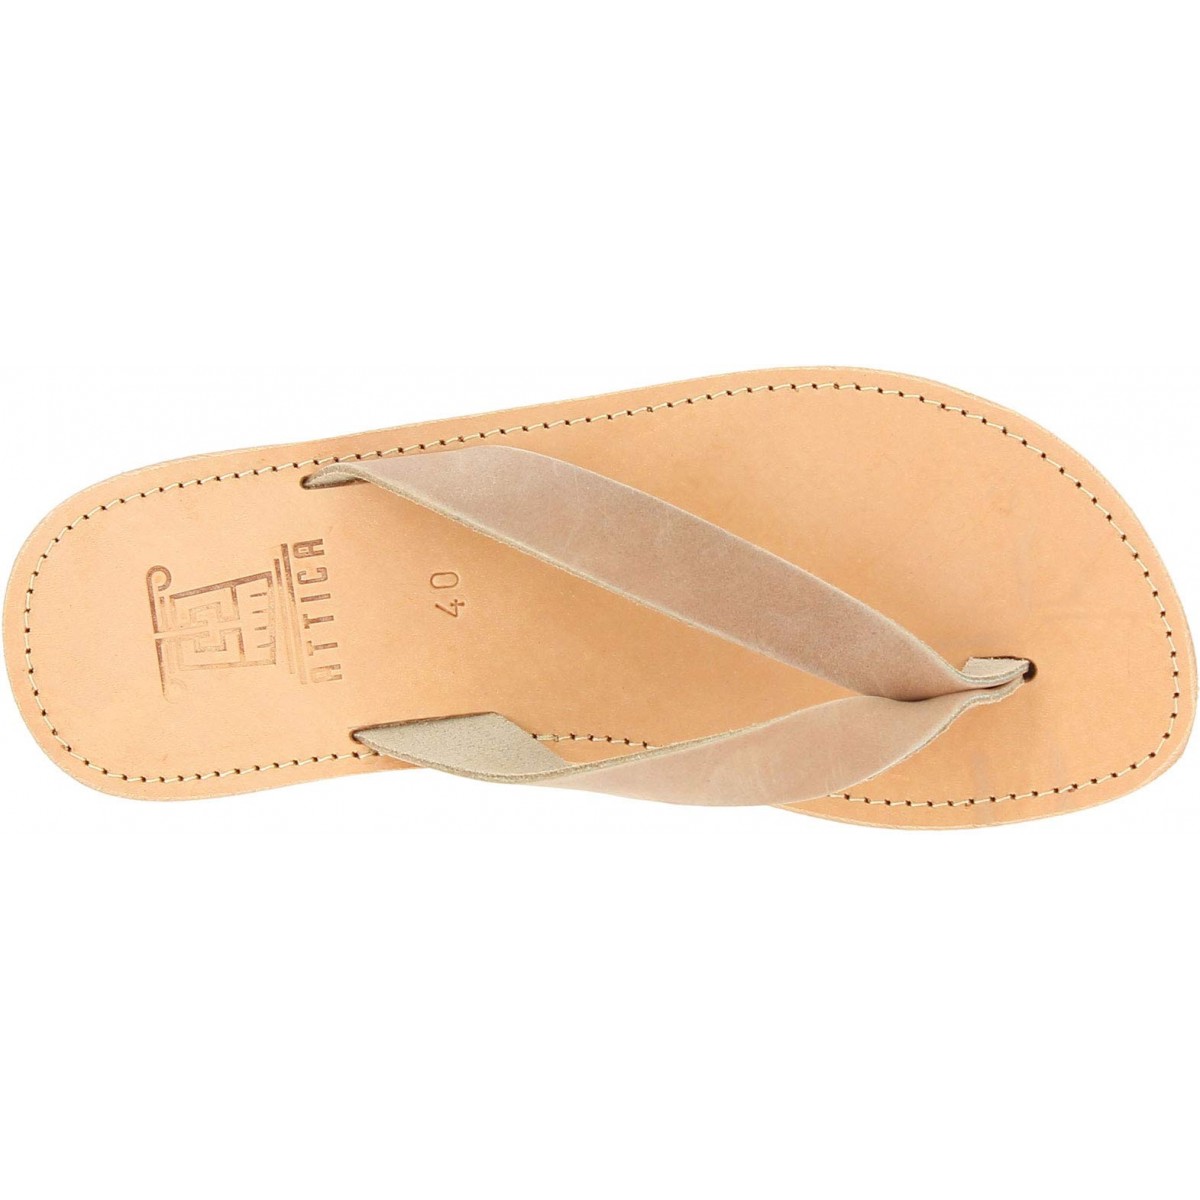 Men's handmade slip-on thong sandals in tan nubuck leather | The ...